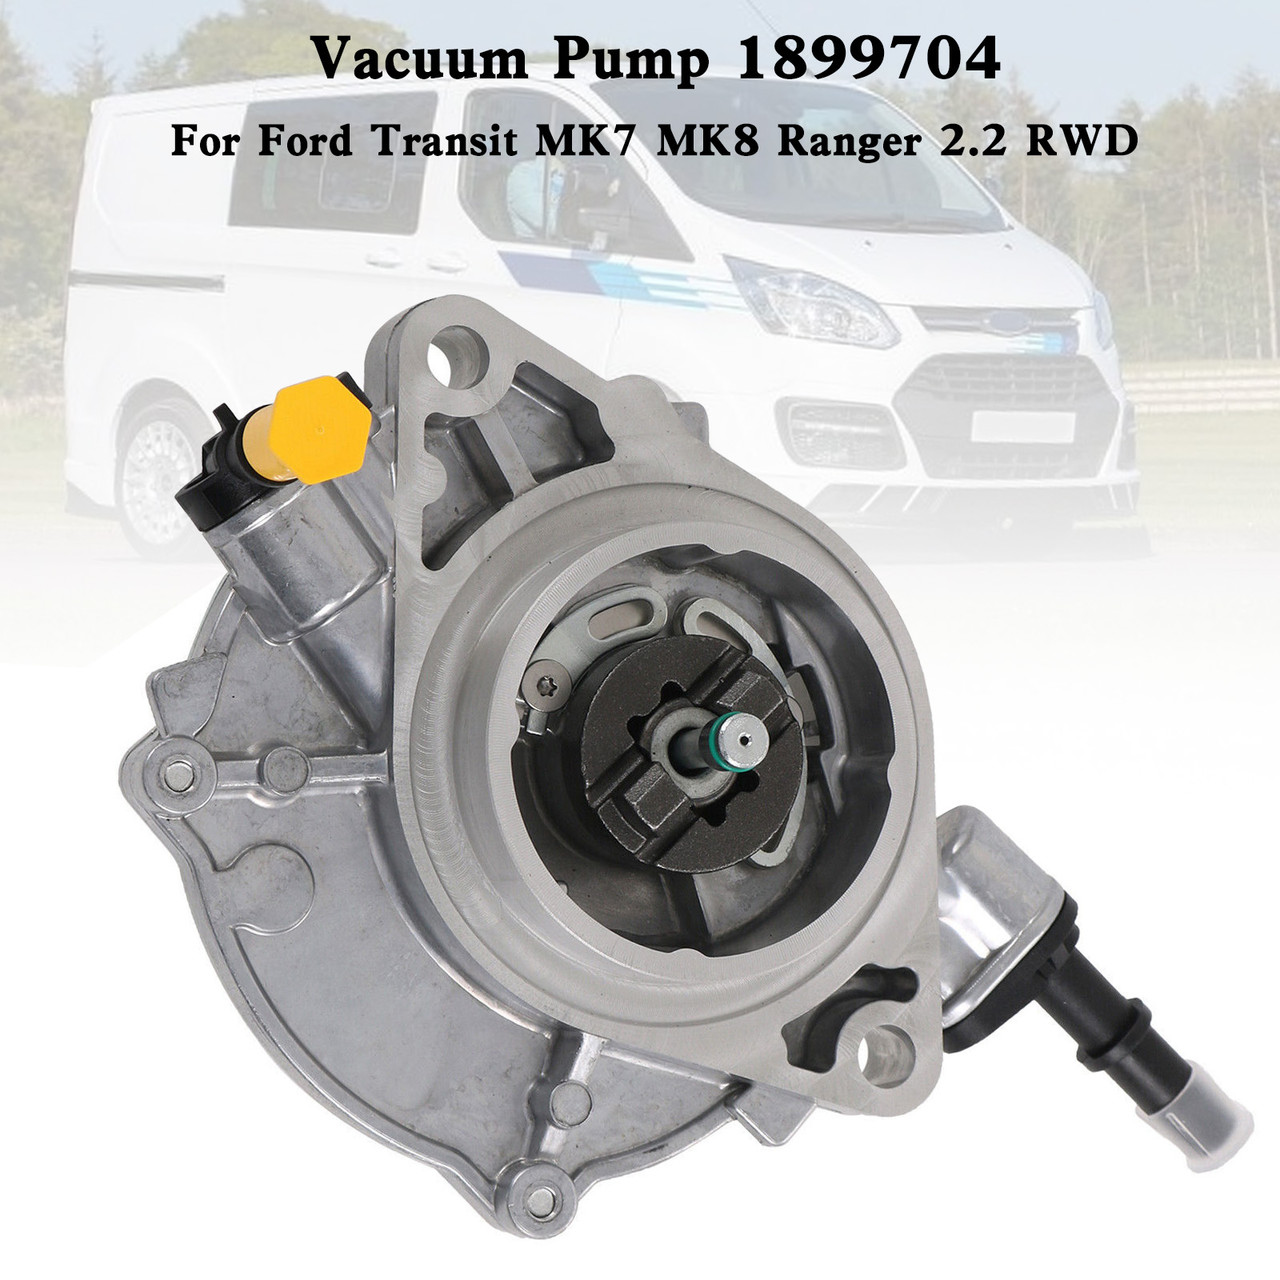 Vacuum Pump 1899704 For Ford Transit MK7 MK8 Ranger 2.2 RWD